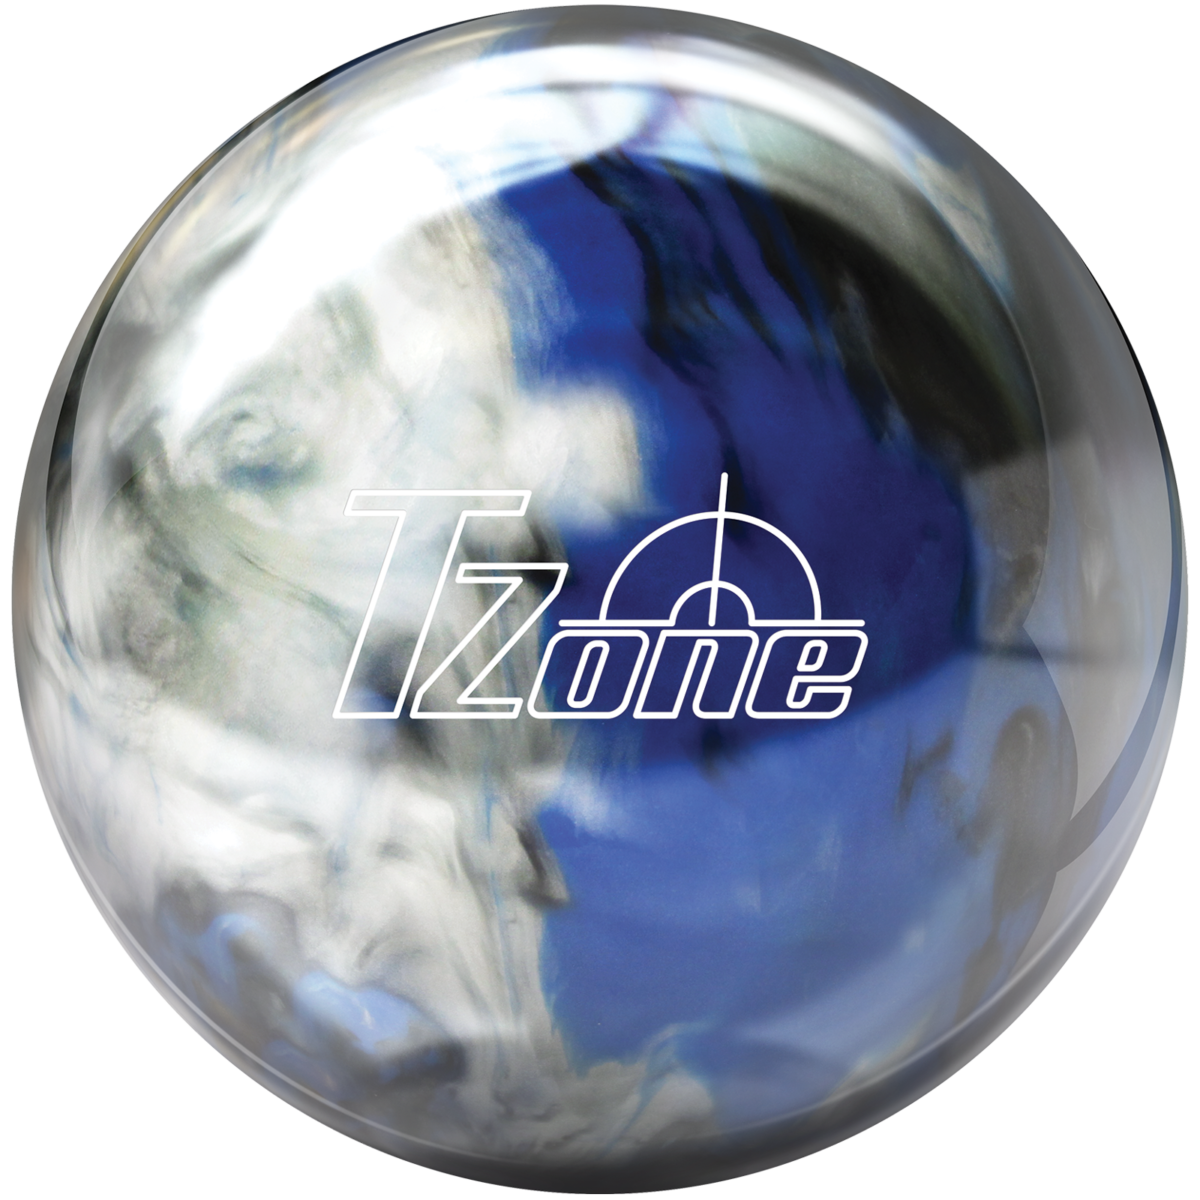 Brunswick Tzone Deep Space Bowling Ball NIB 1st Quality 